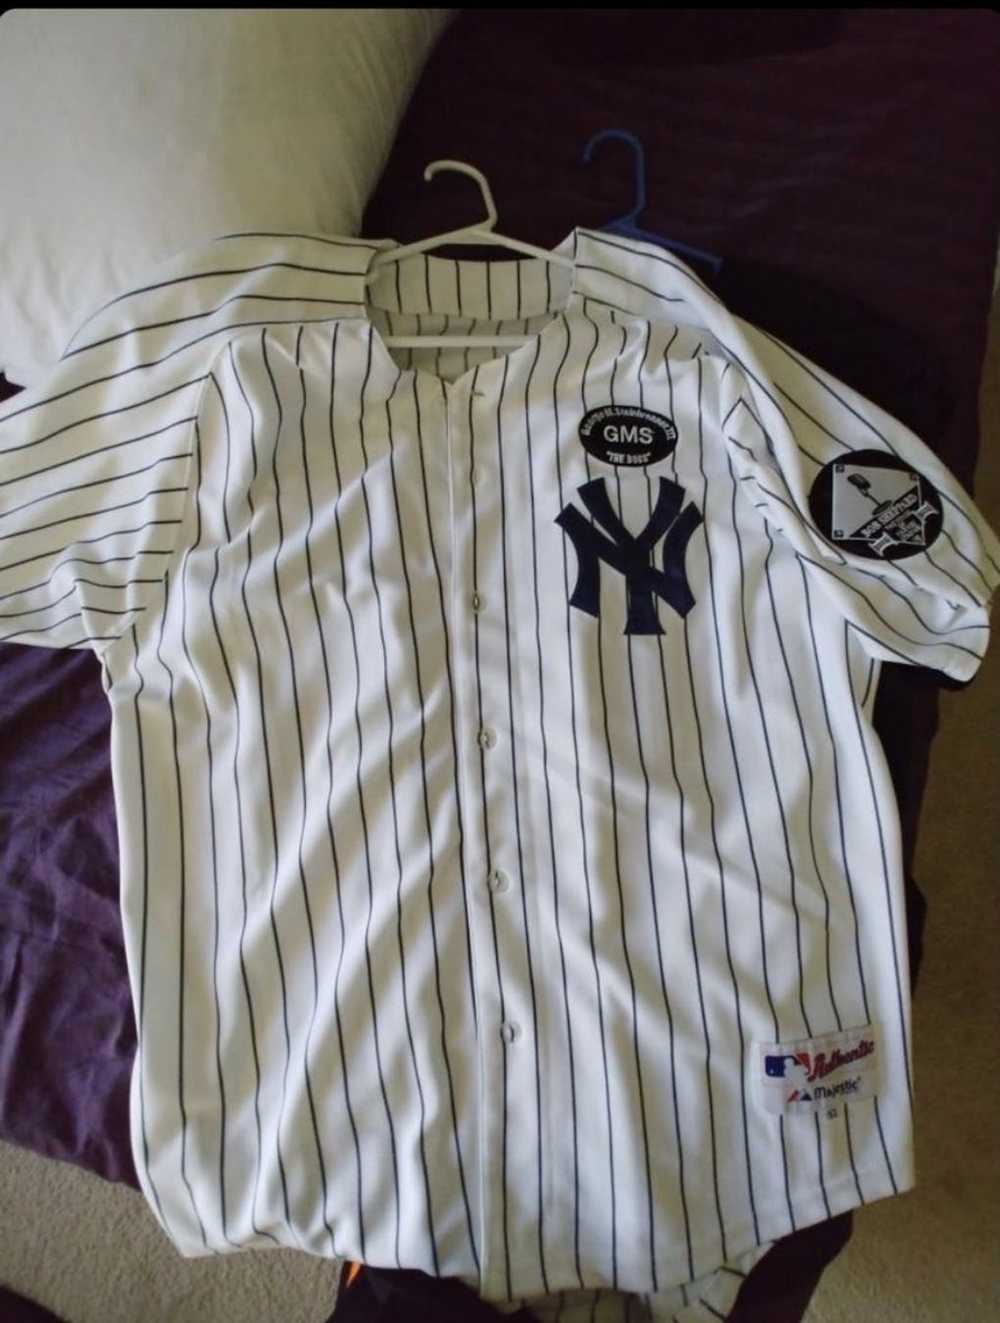 NY Yankees Respect (Re2pect) Derek Jeter T-Shirt (XL)